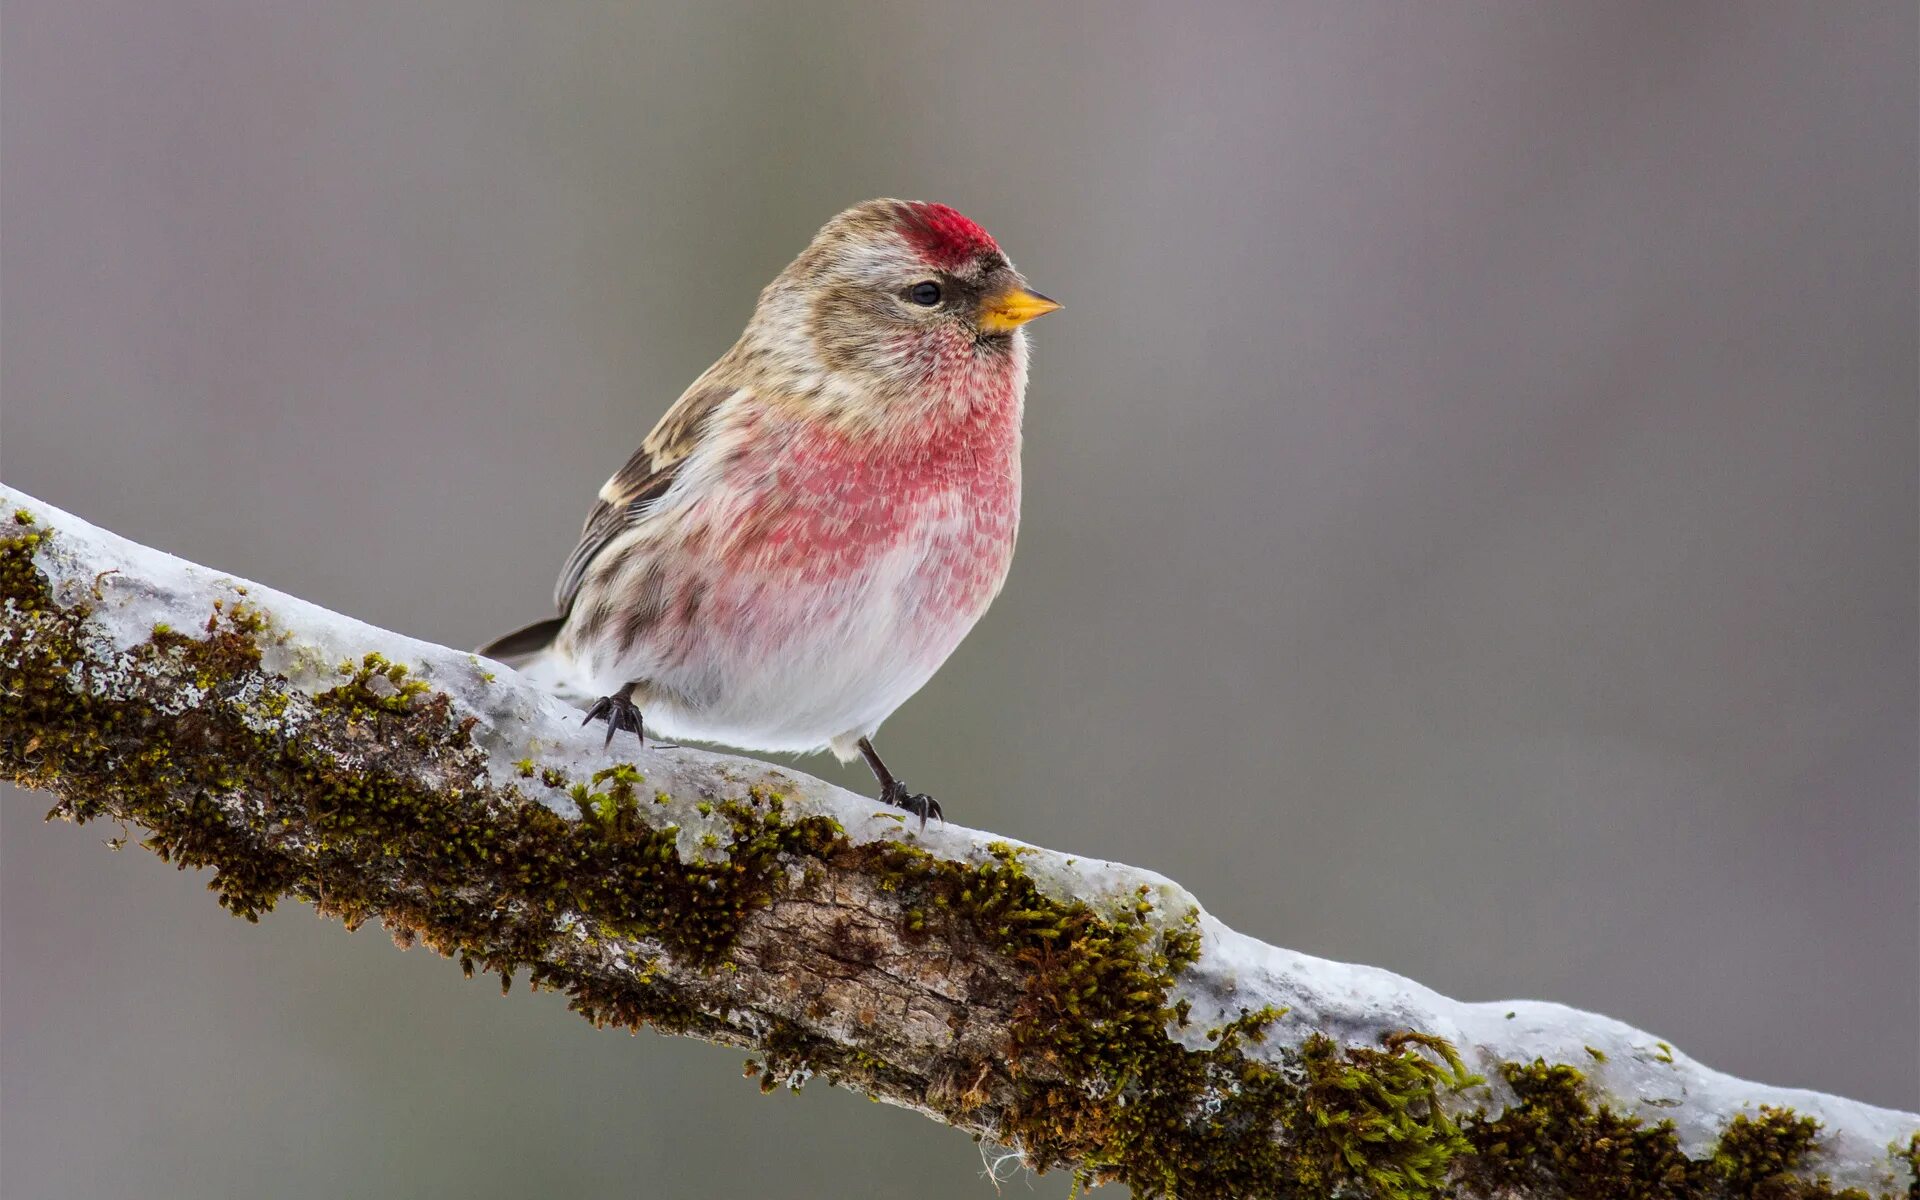 Full bird. Слеток чечетки. Тундряная чечётка. Зимняя птица с розовой грудкой. Чечет птица.